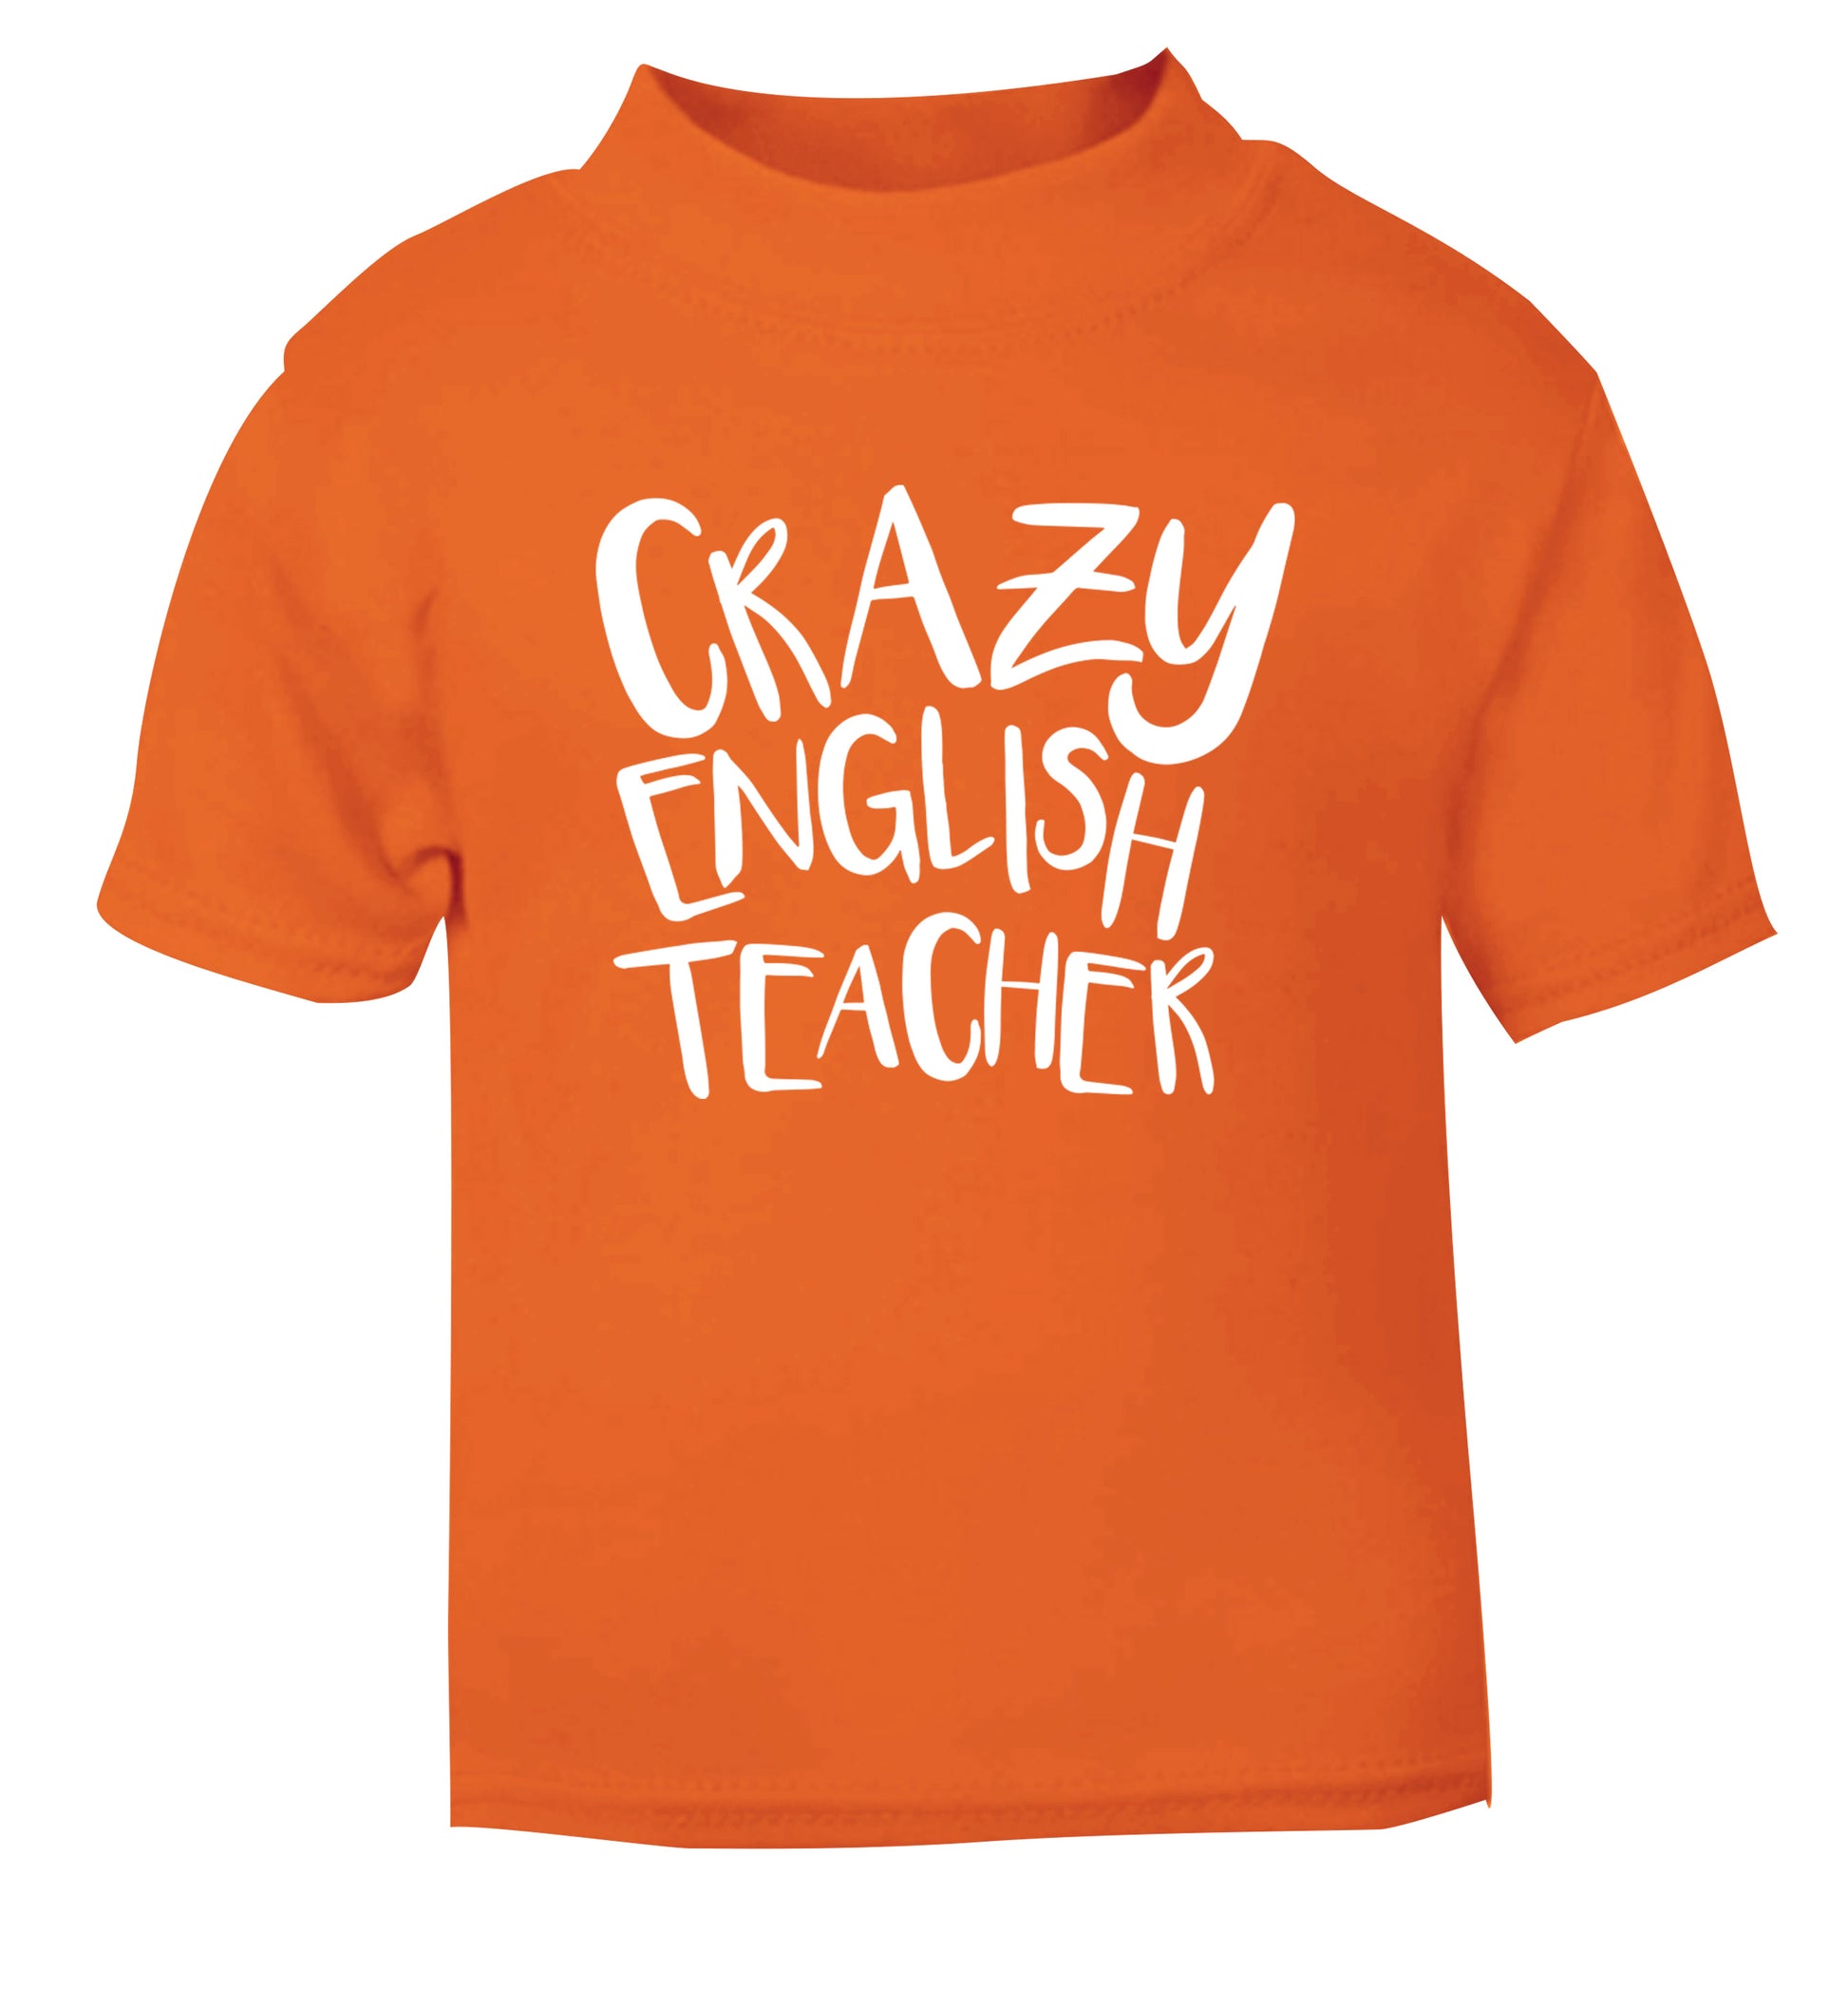 Crazy English Teacher orange Baby Toddler Tshirt 2 Years